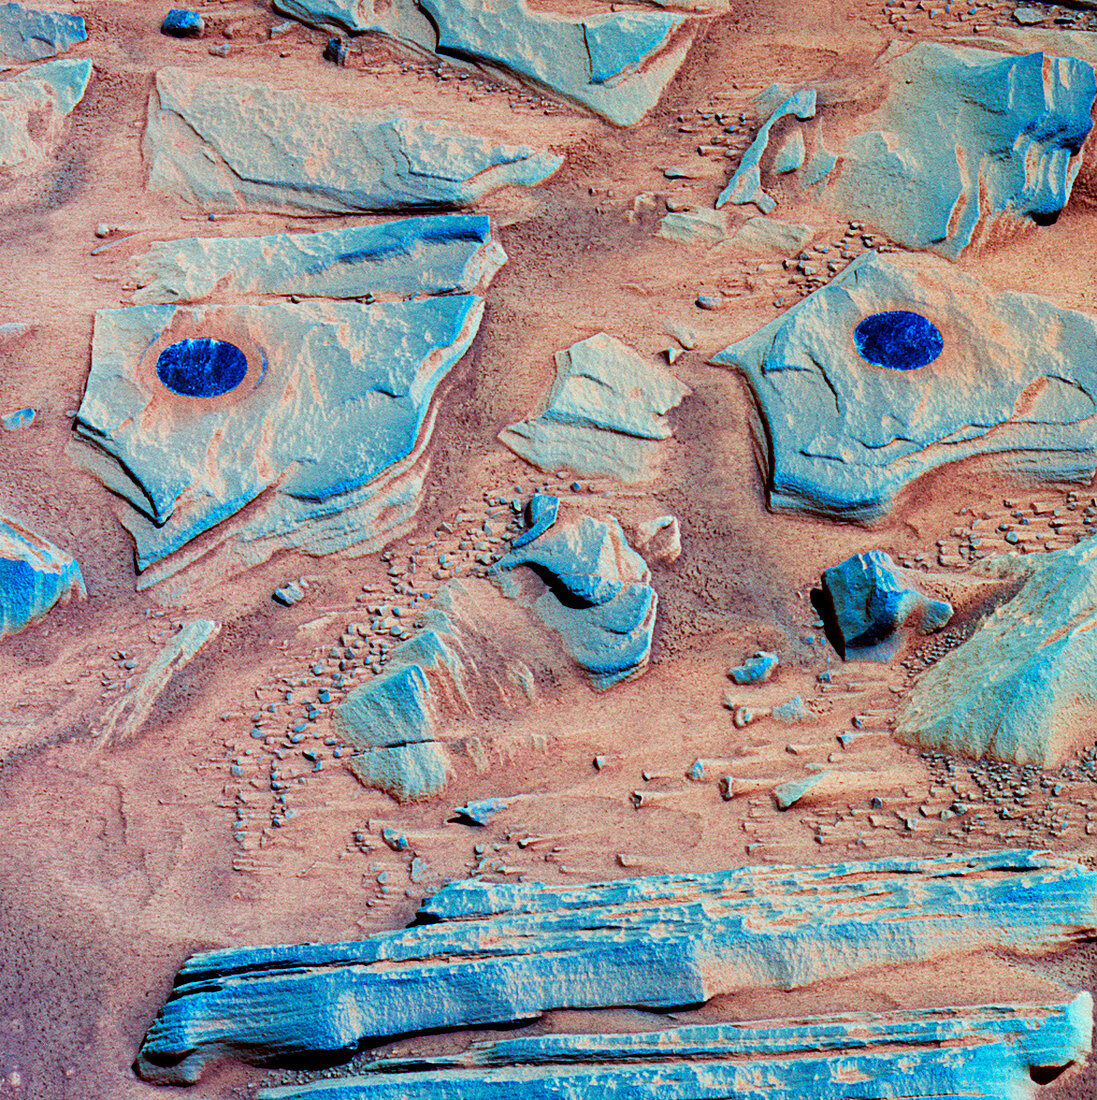 Martian rock experiments,Spirit rover